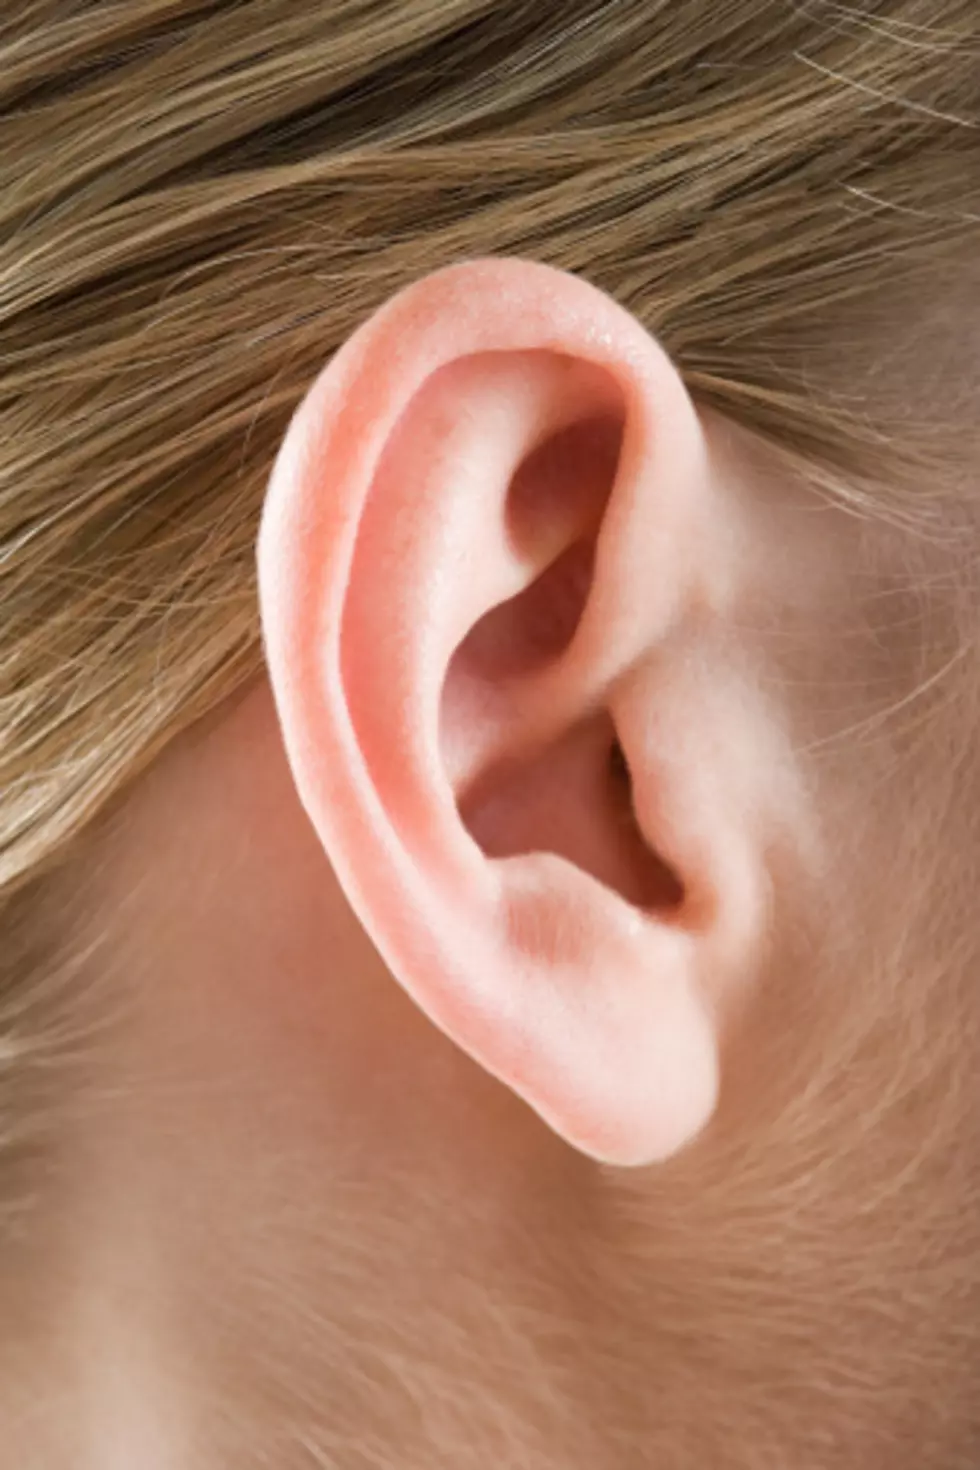 Illinois Girl’s Hypersensitive Hearing Saves Neighbor’s Life